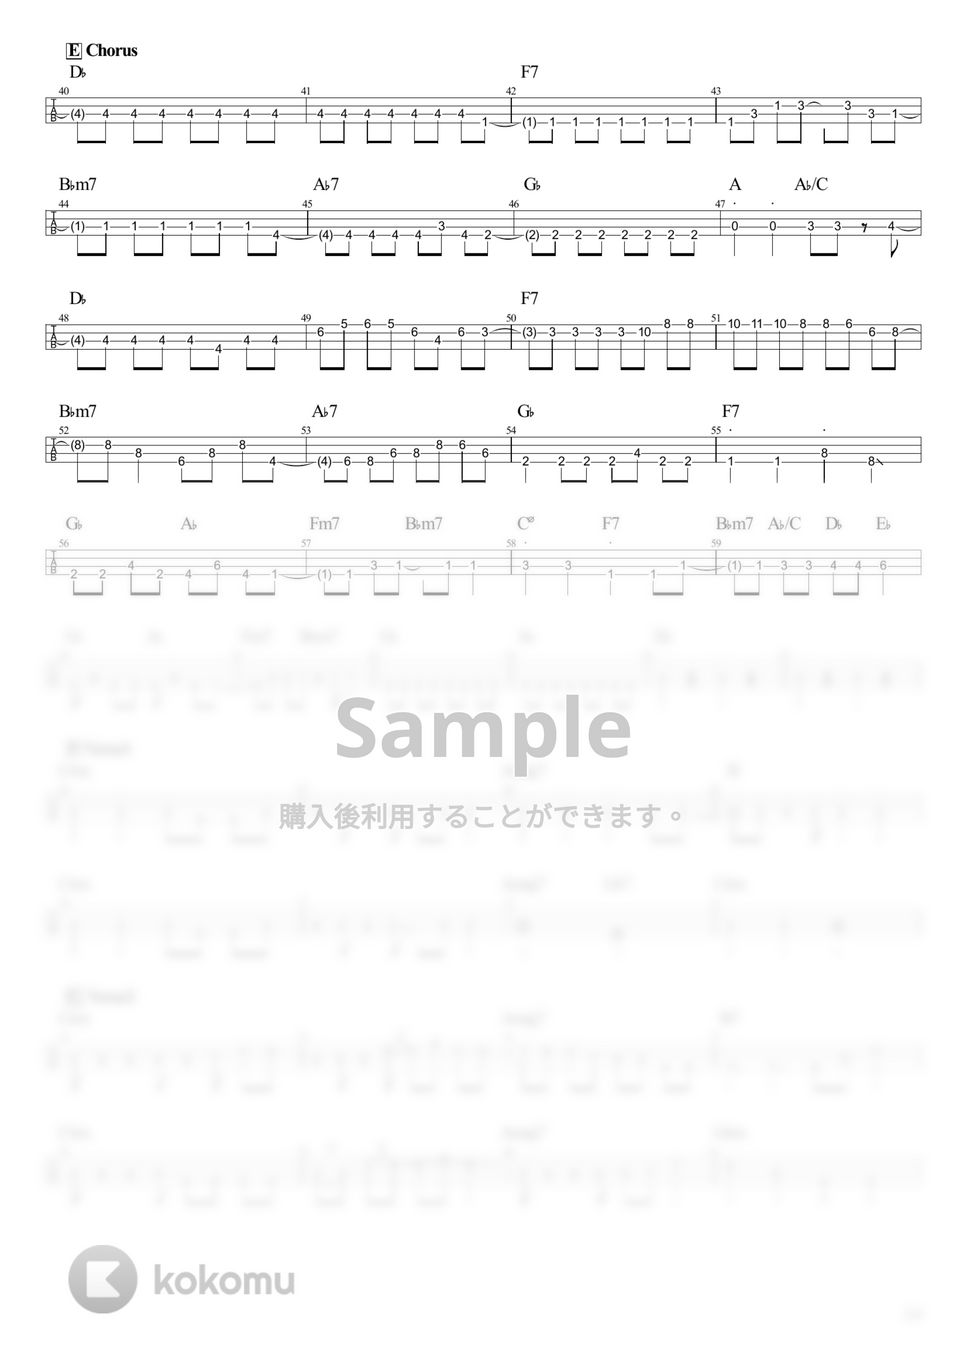 asmi - ドキメキダイアリー (Tabのみ/ベース Tab譜 4弦) by T's bass score